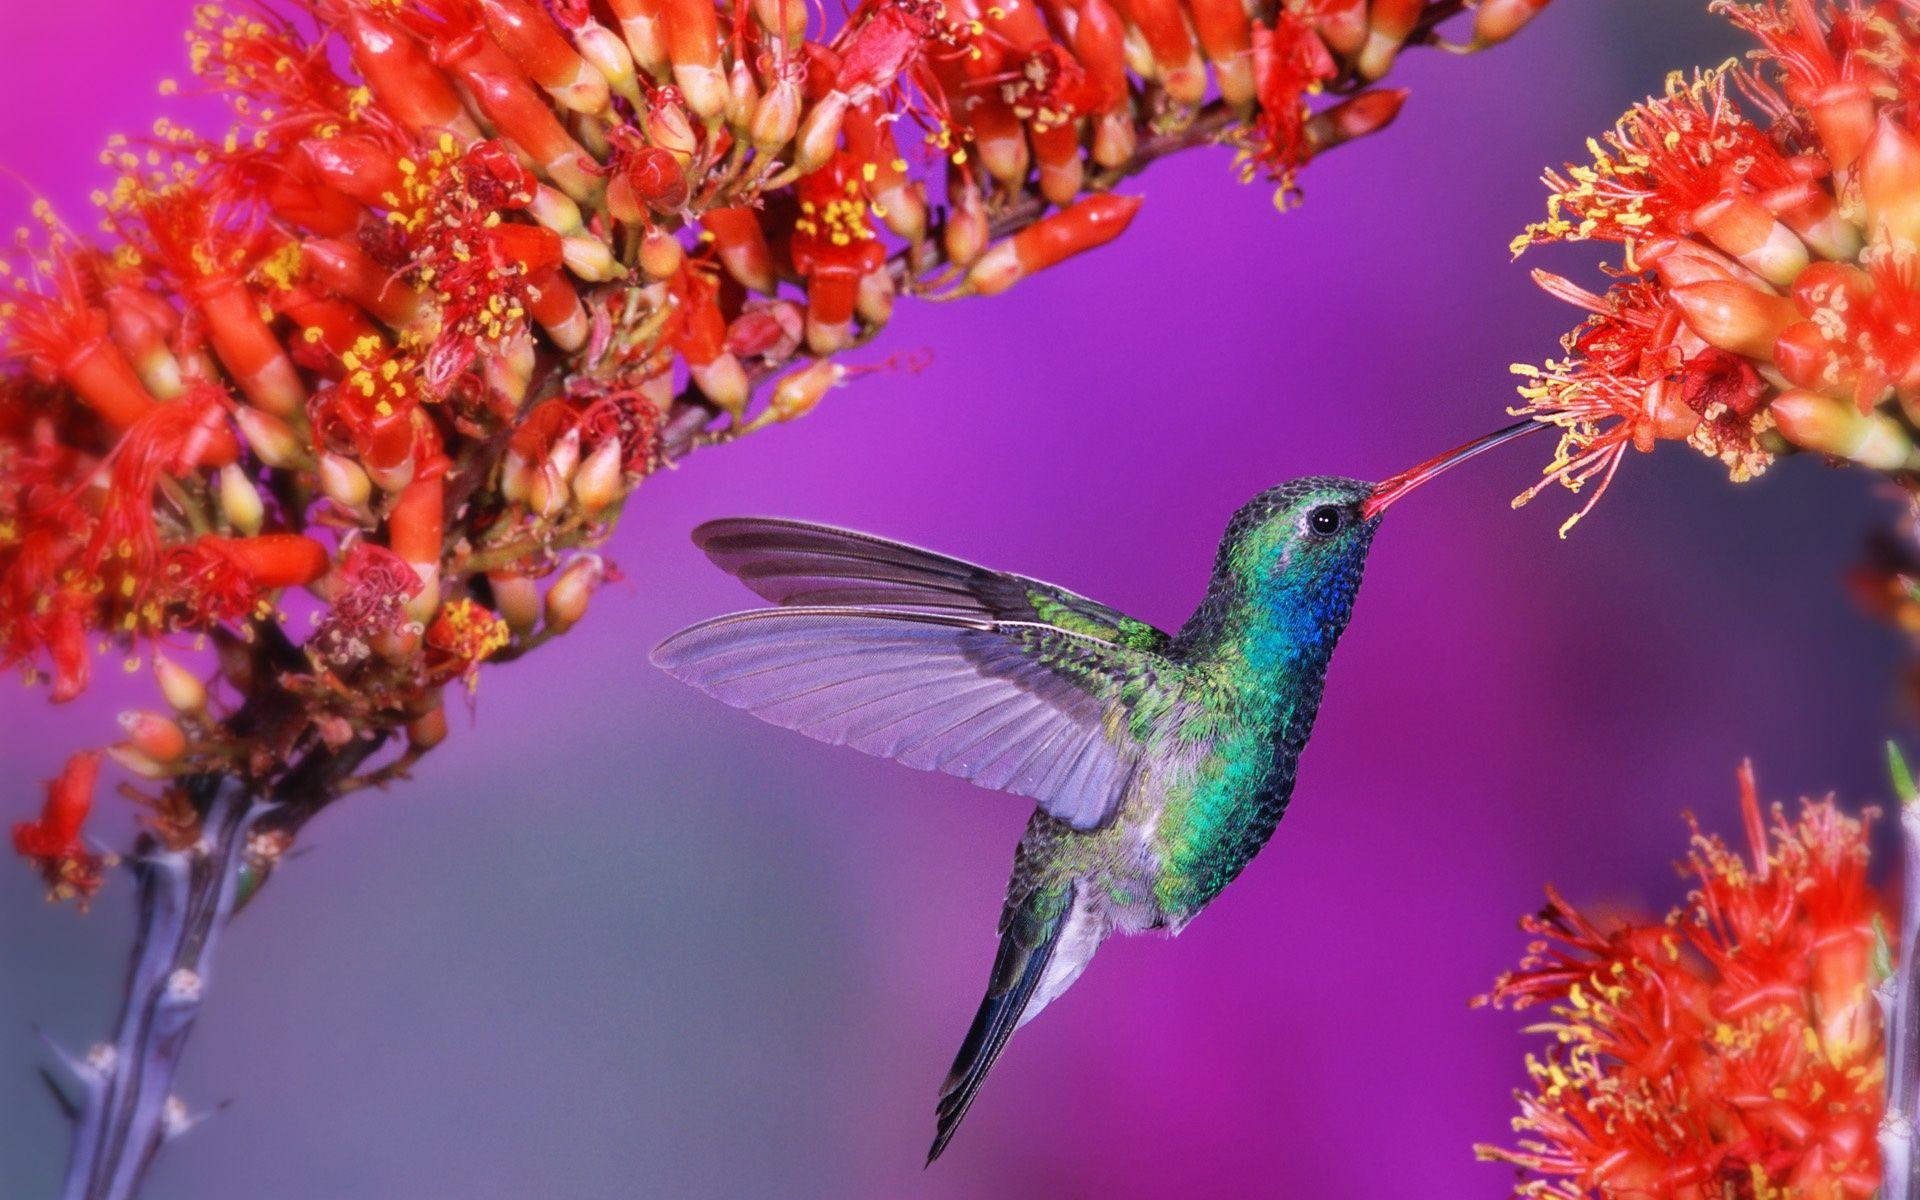 download Hummingbird animals wallpaper image. Places to Visit